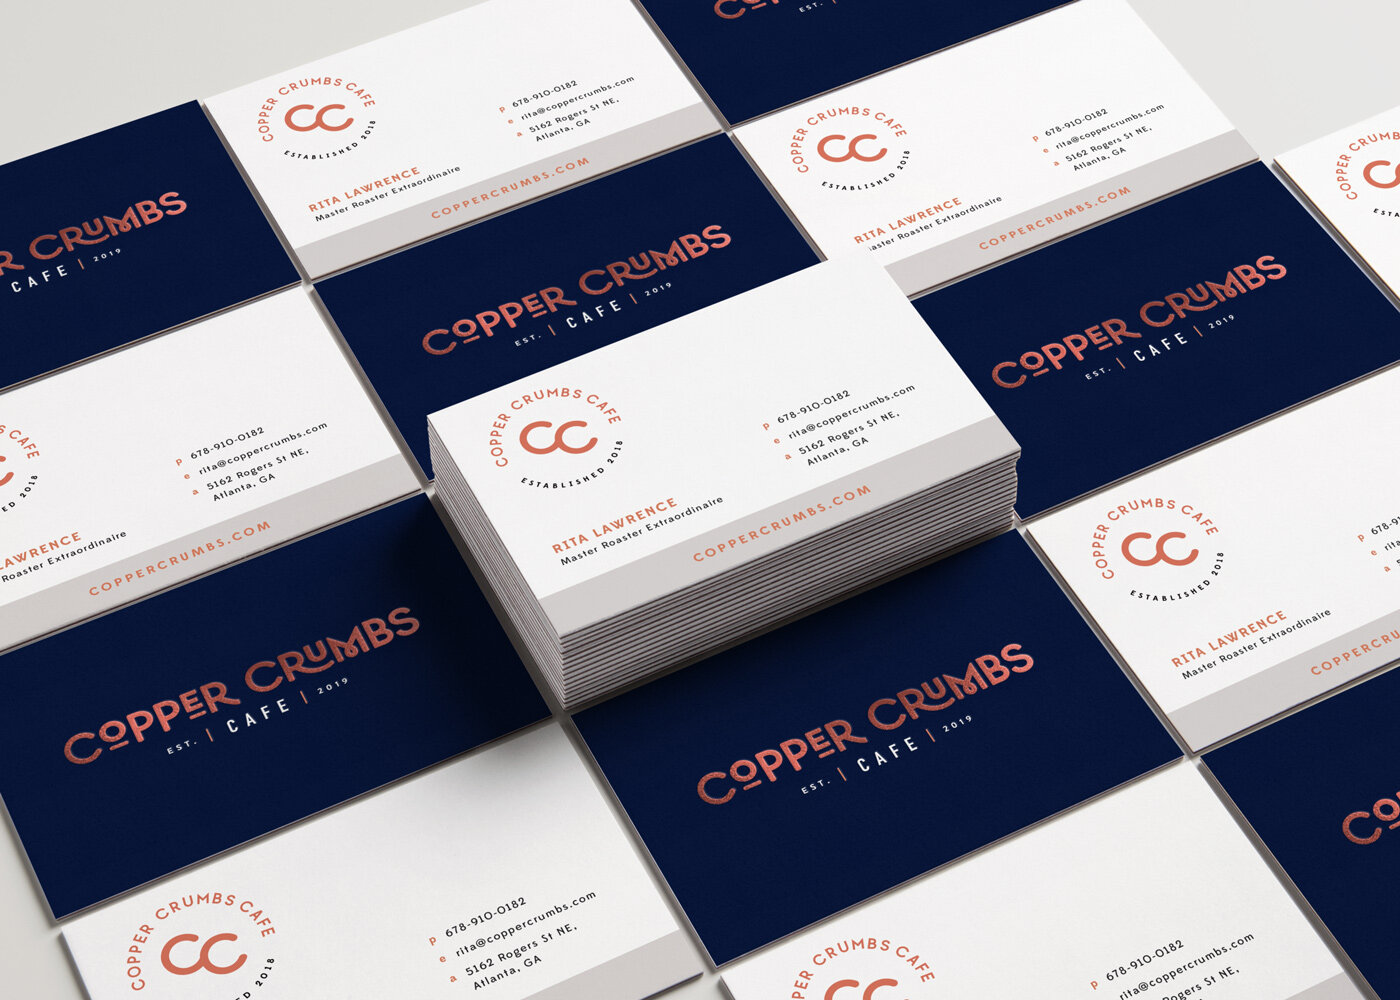 Copper crumbs business card.jpg